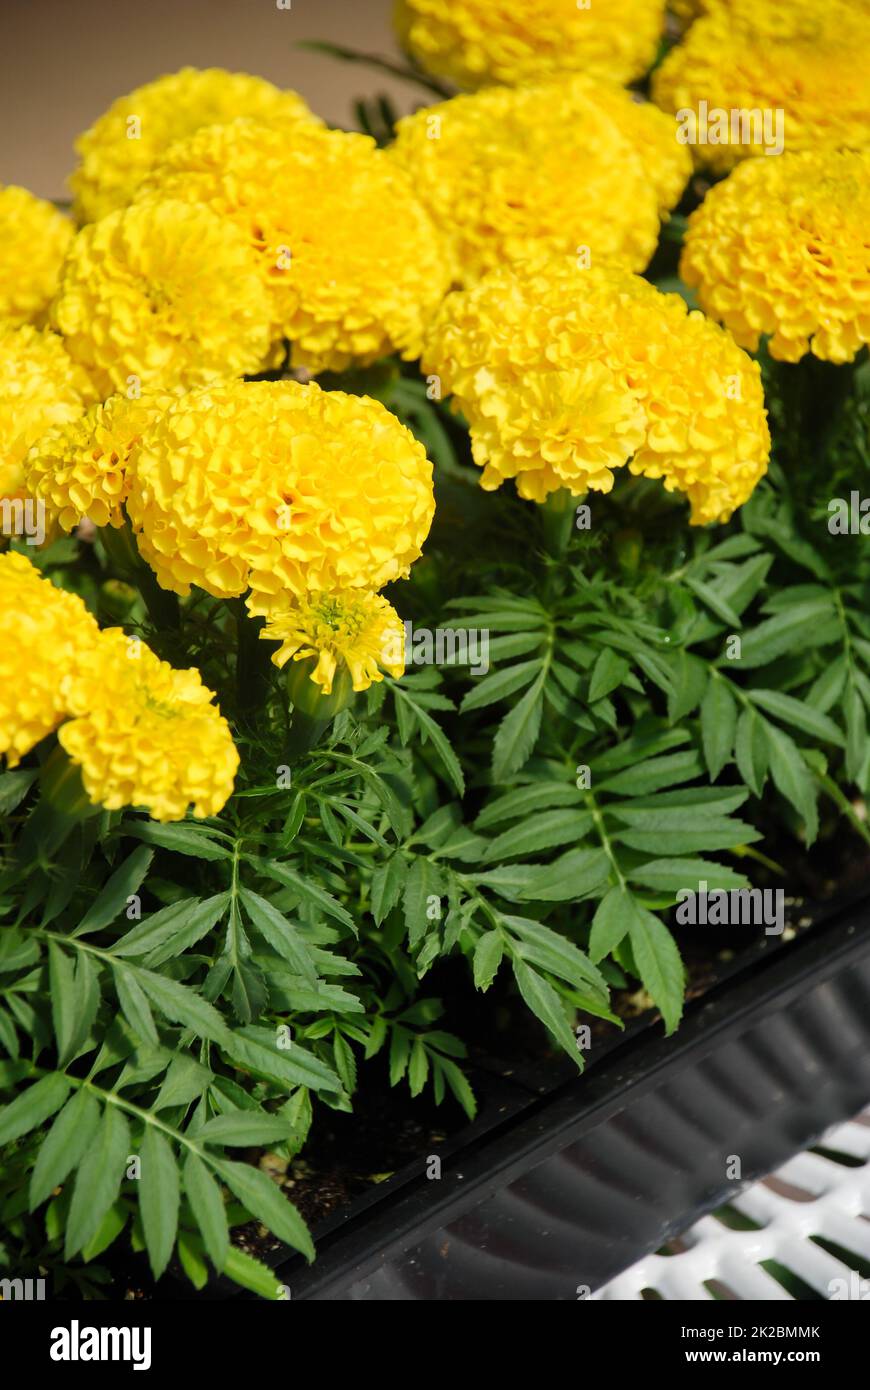 Gelb-Ringelblume (Tagetes erecta, mexikanische Ringelblume) Stockfoto